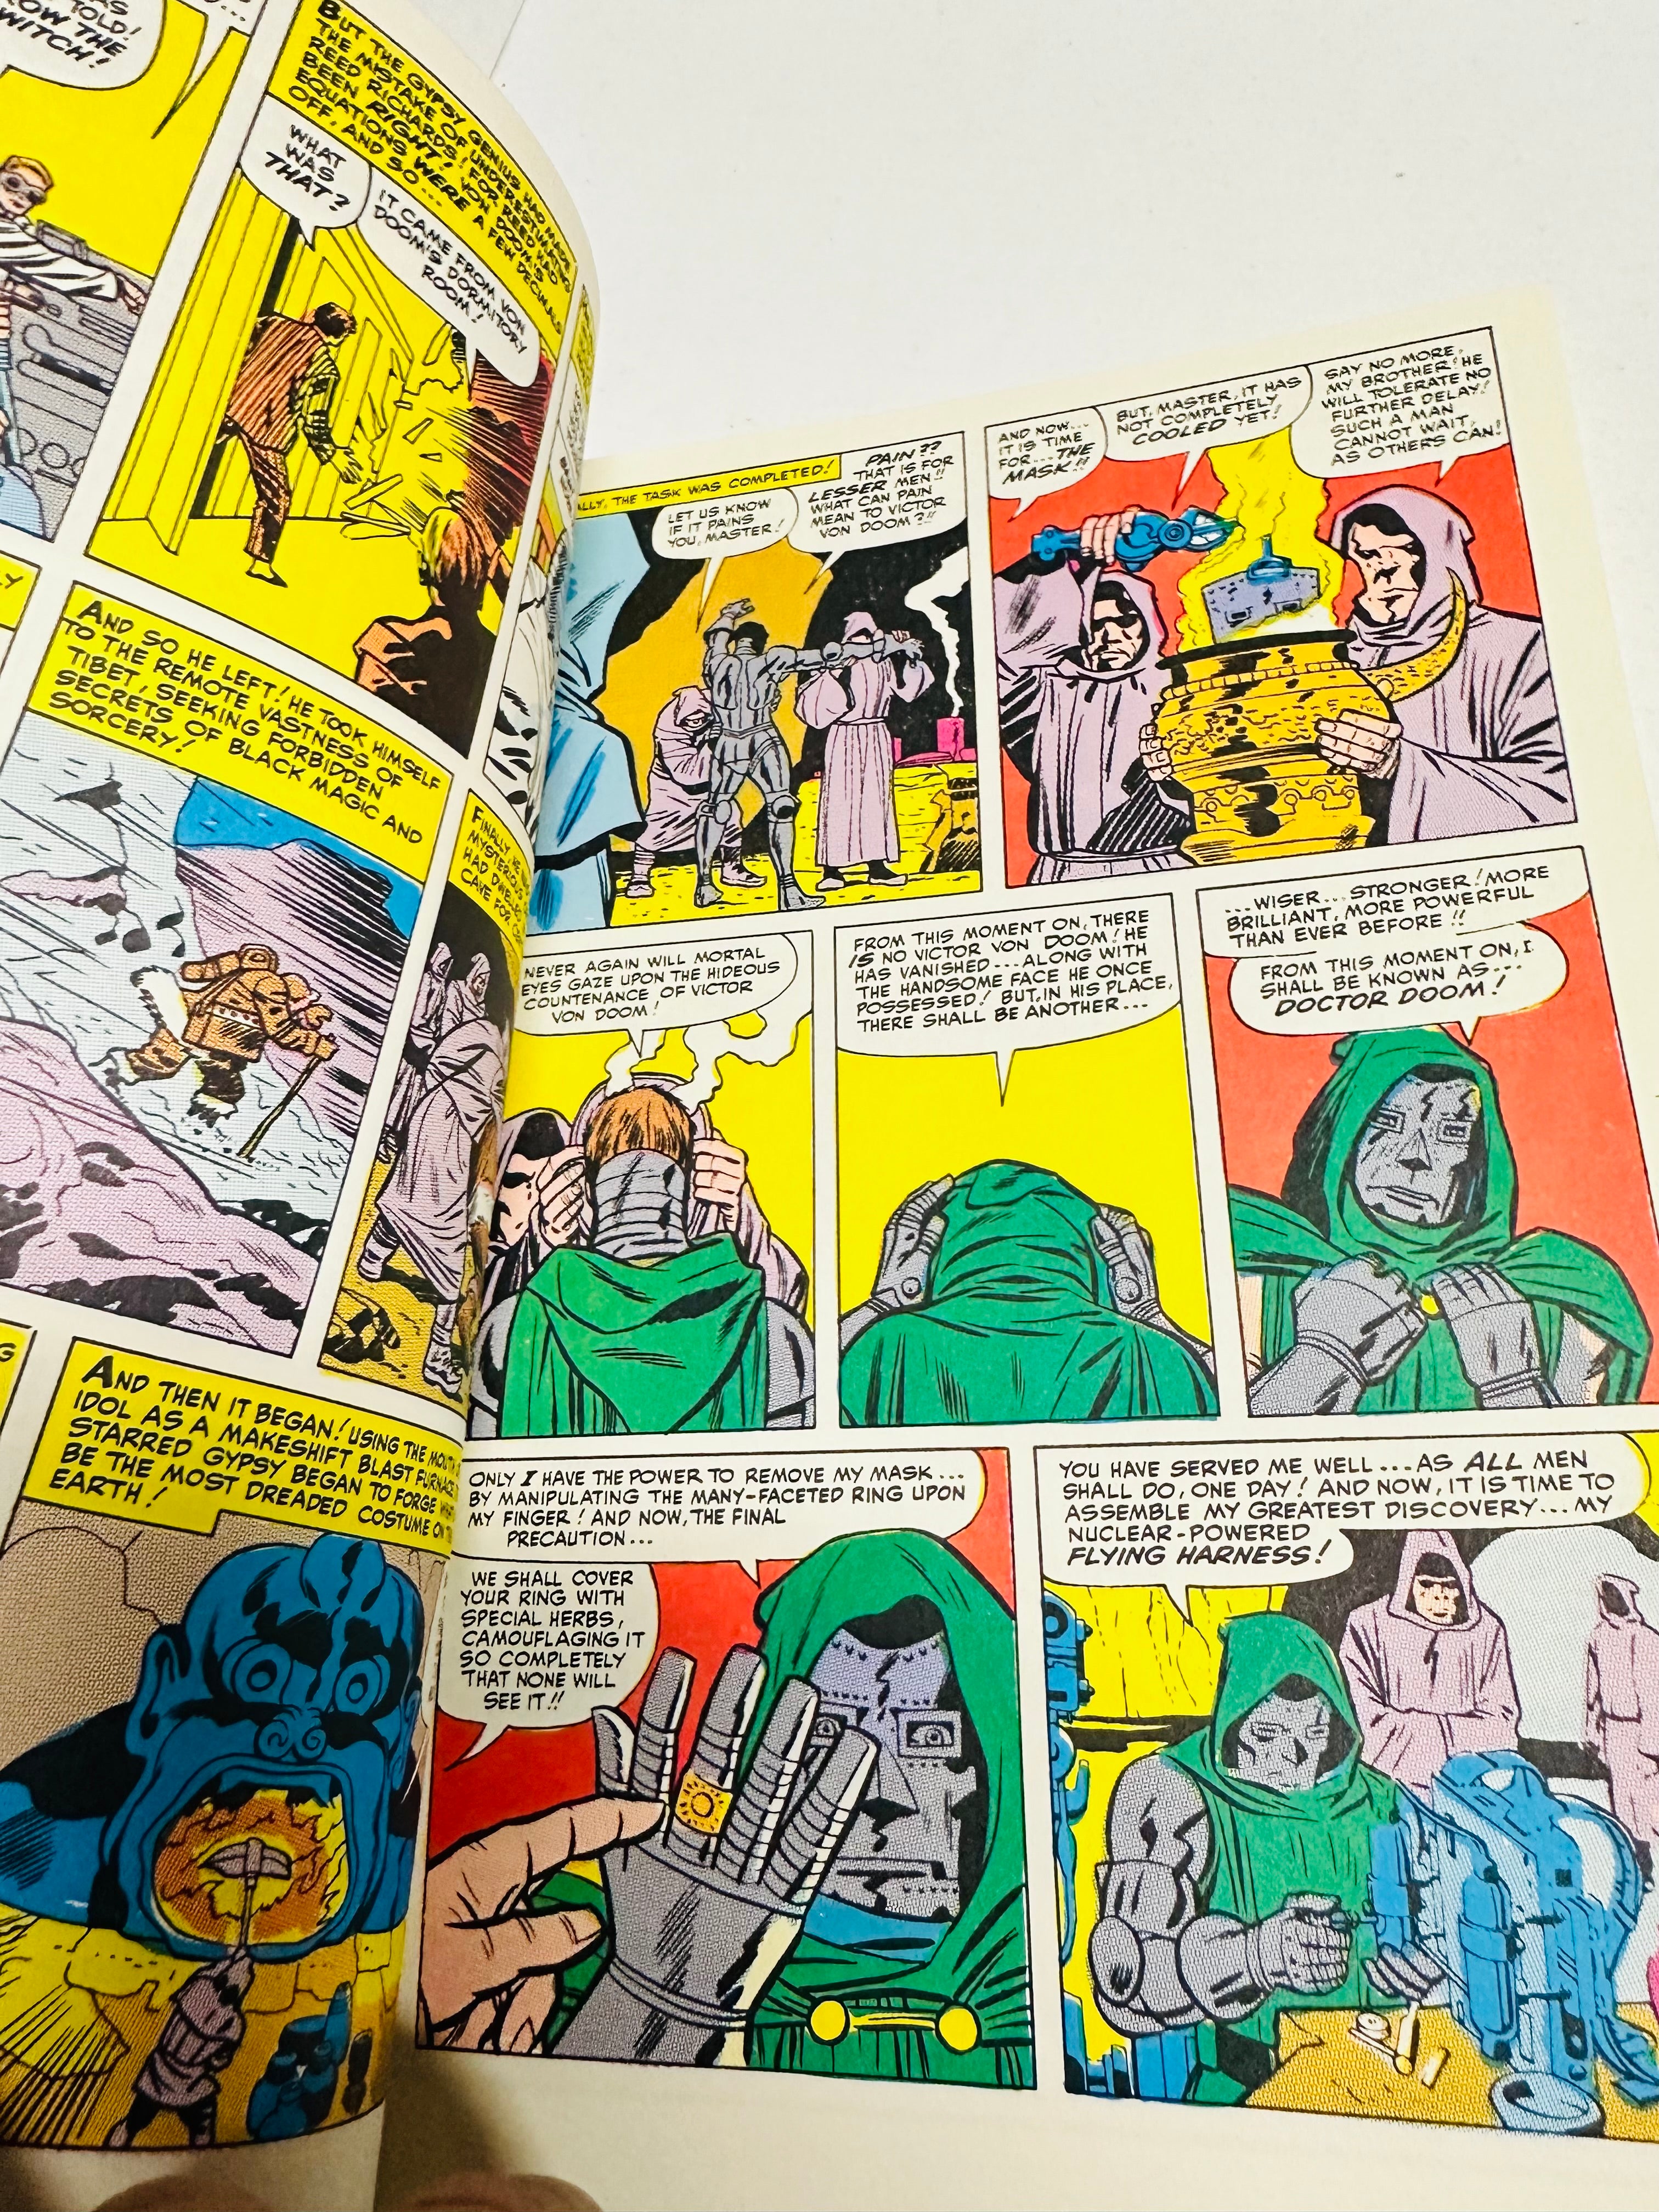 Bring on the Bad Guys Marvel comics large paperback 1976